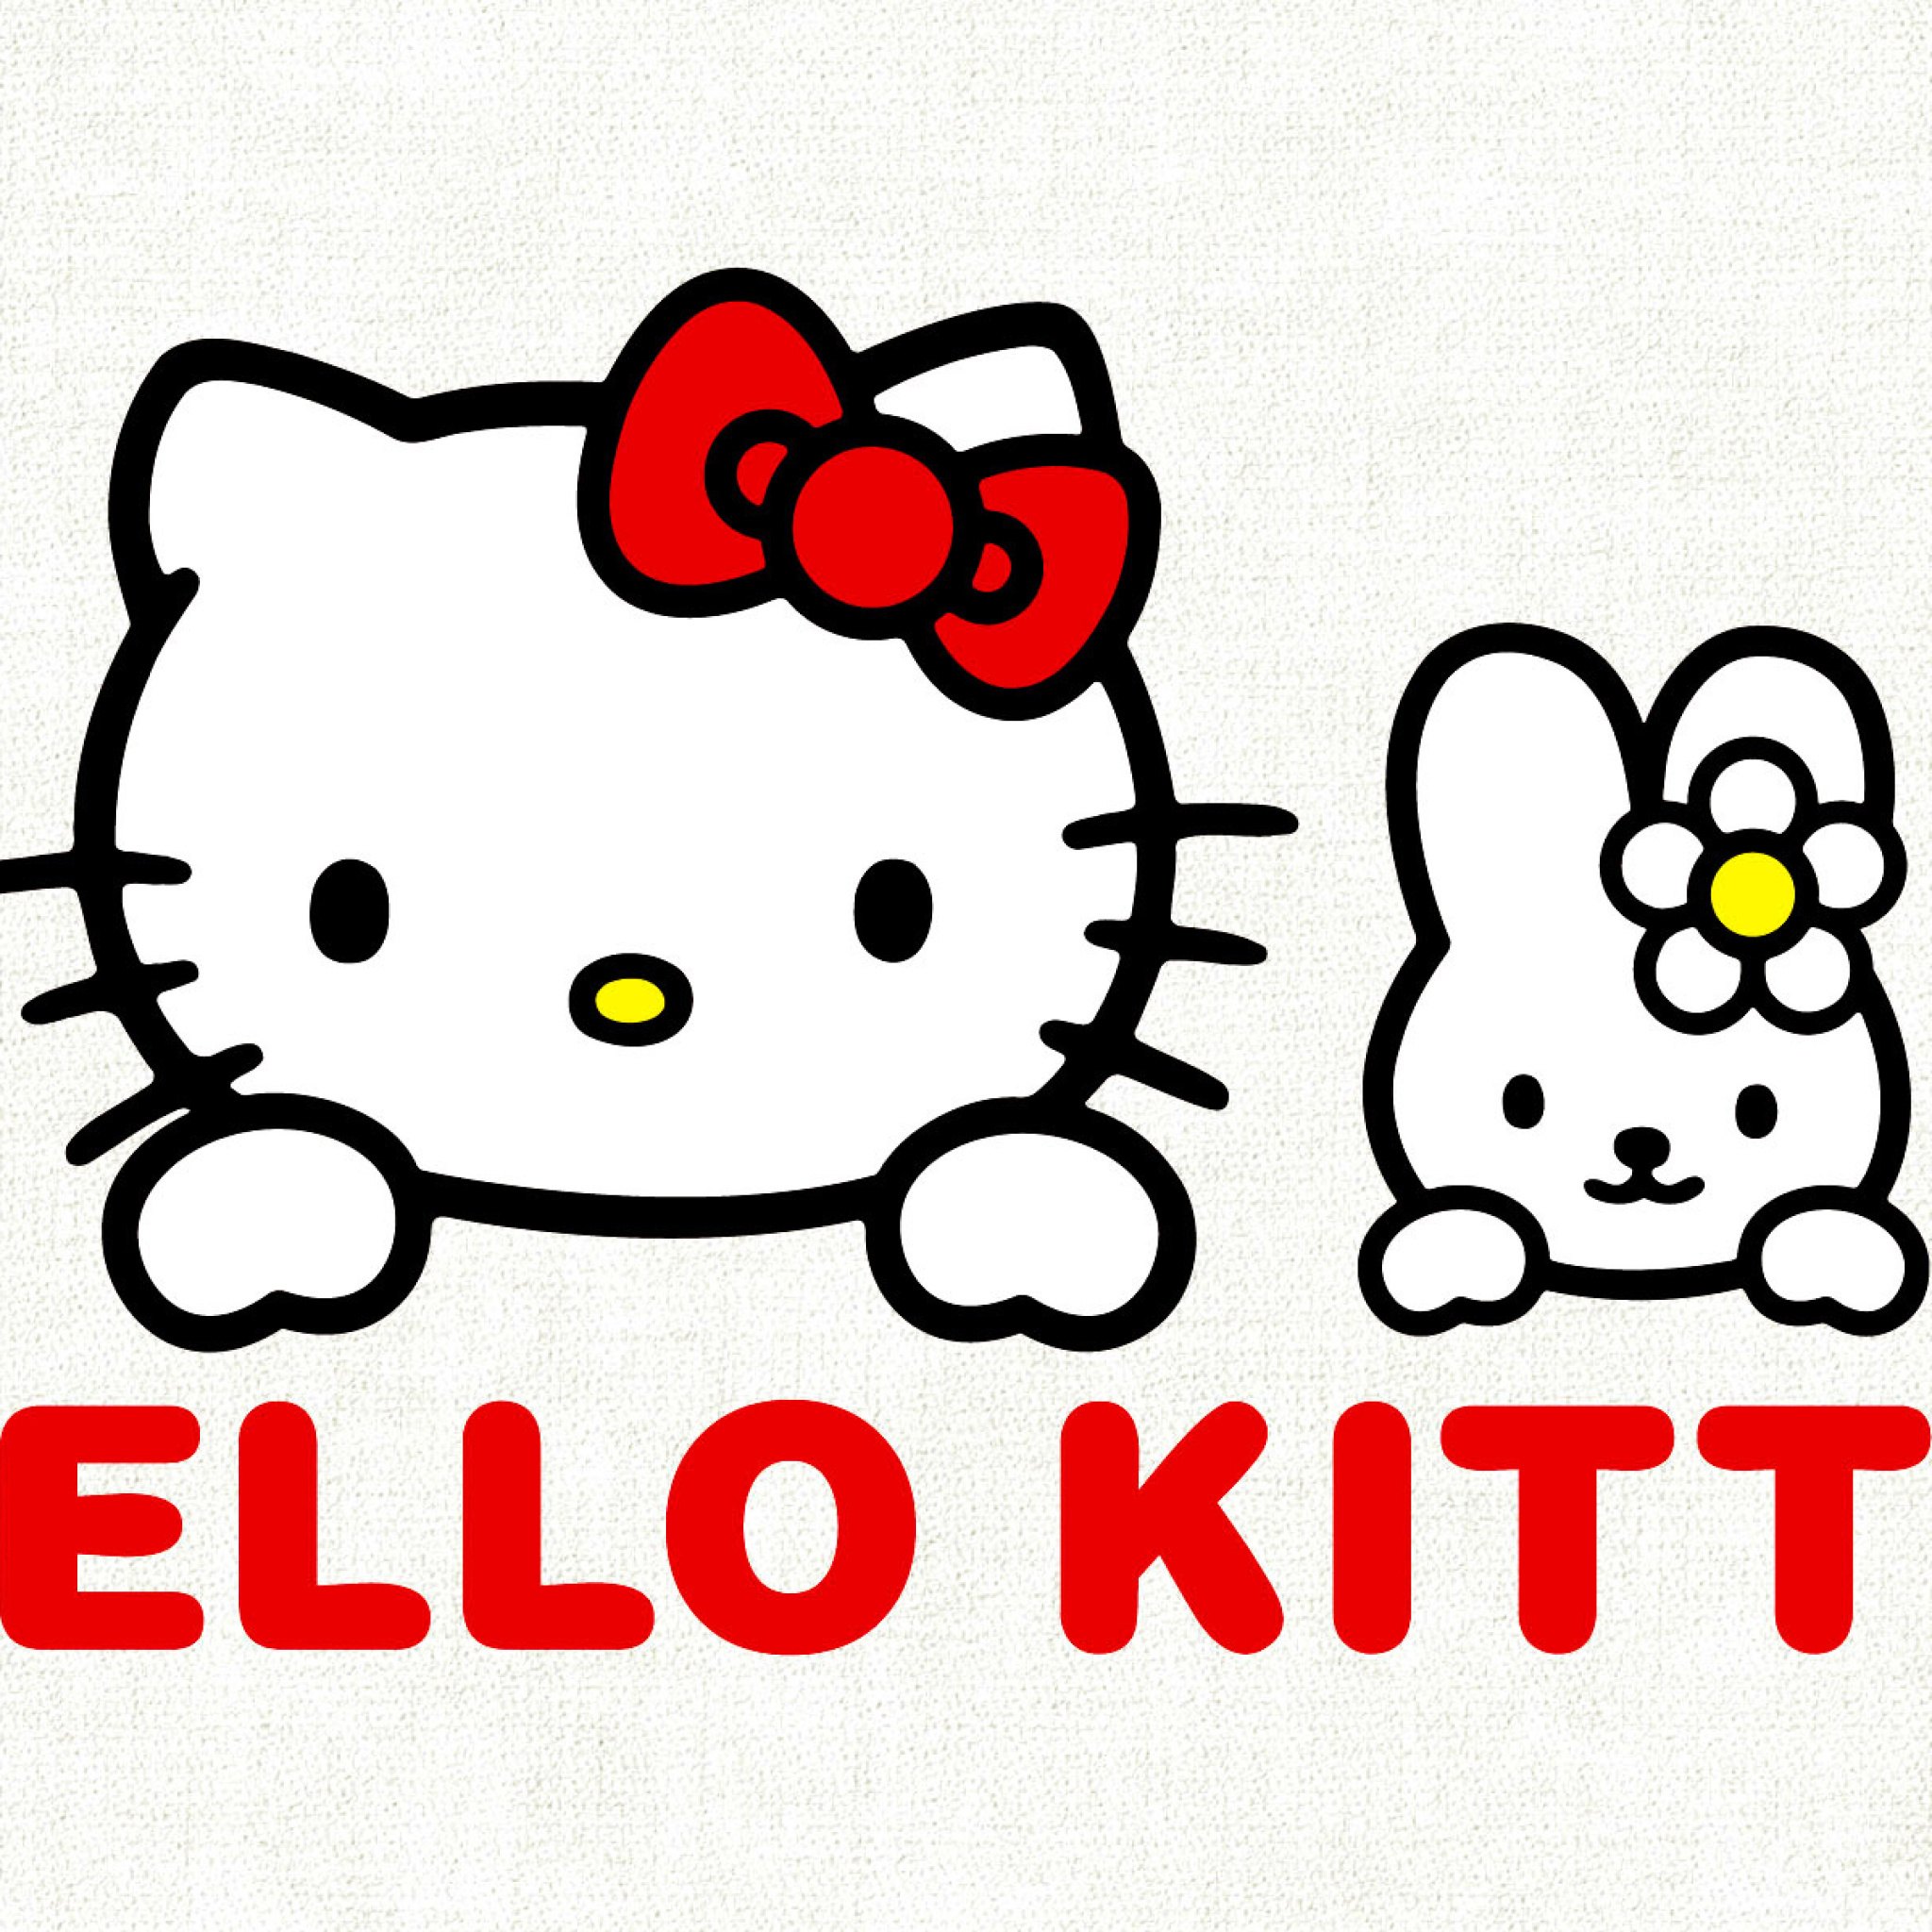 Название hello. Hello Kitty. Картинки hello Kitty. Логотип Хелло Китти. Наклейки Куруми b [tkkje rbnb.